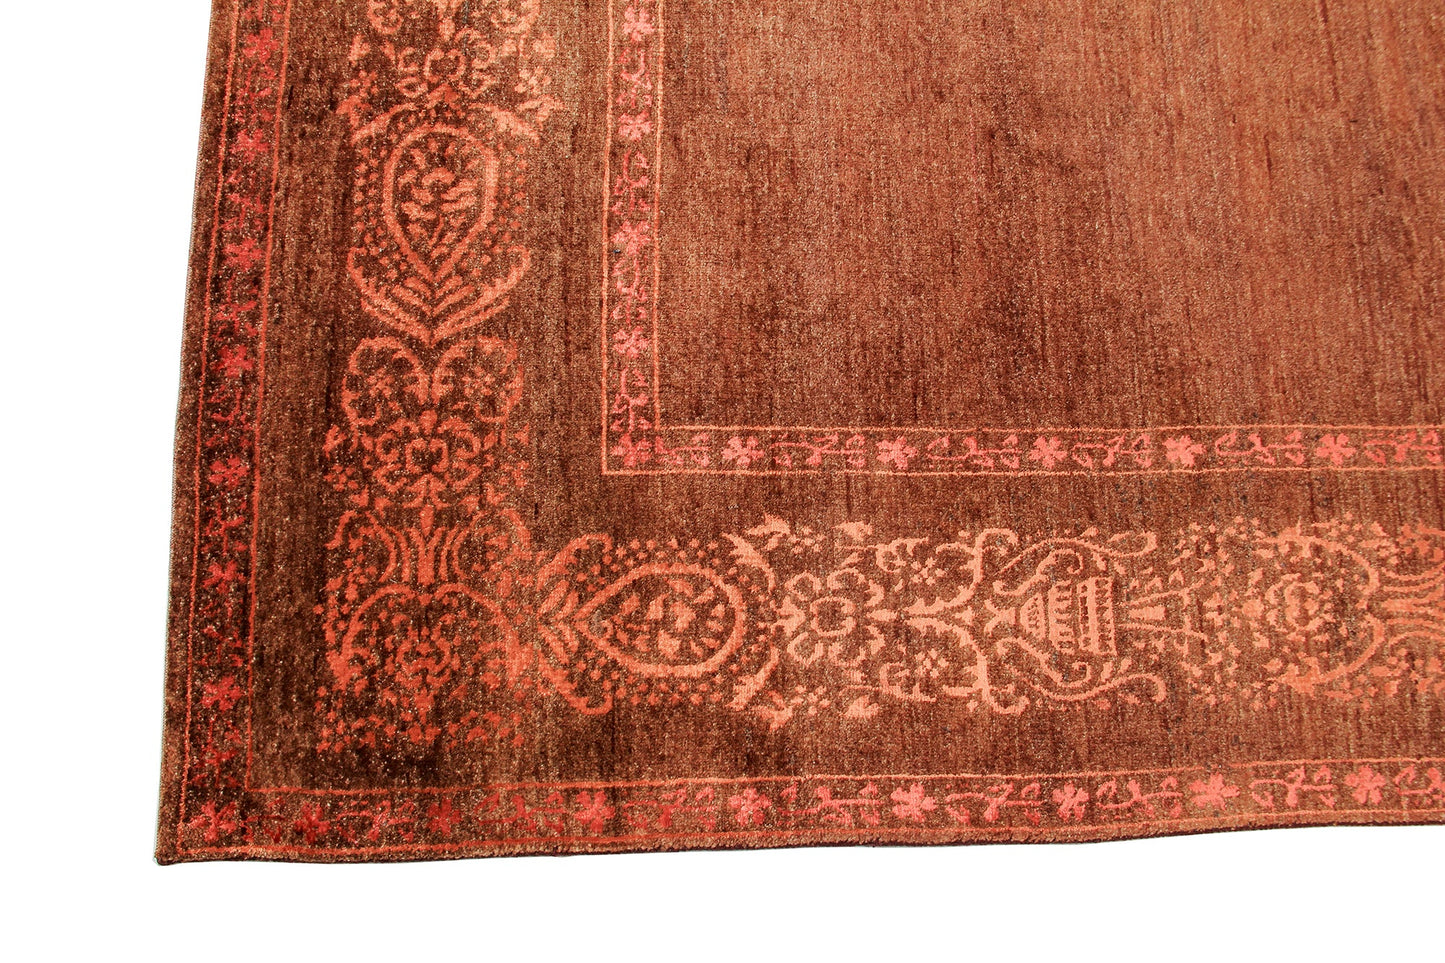 Modern Handmade Indian Carpet product image #27556211753130